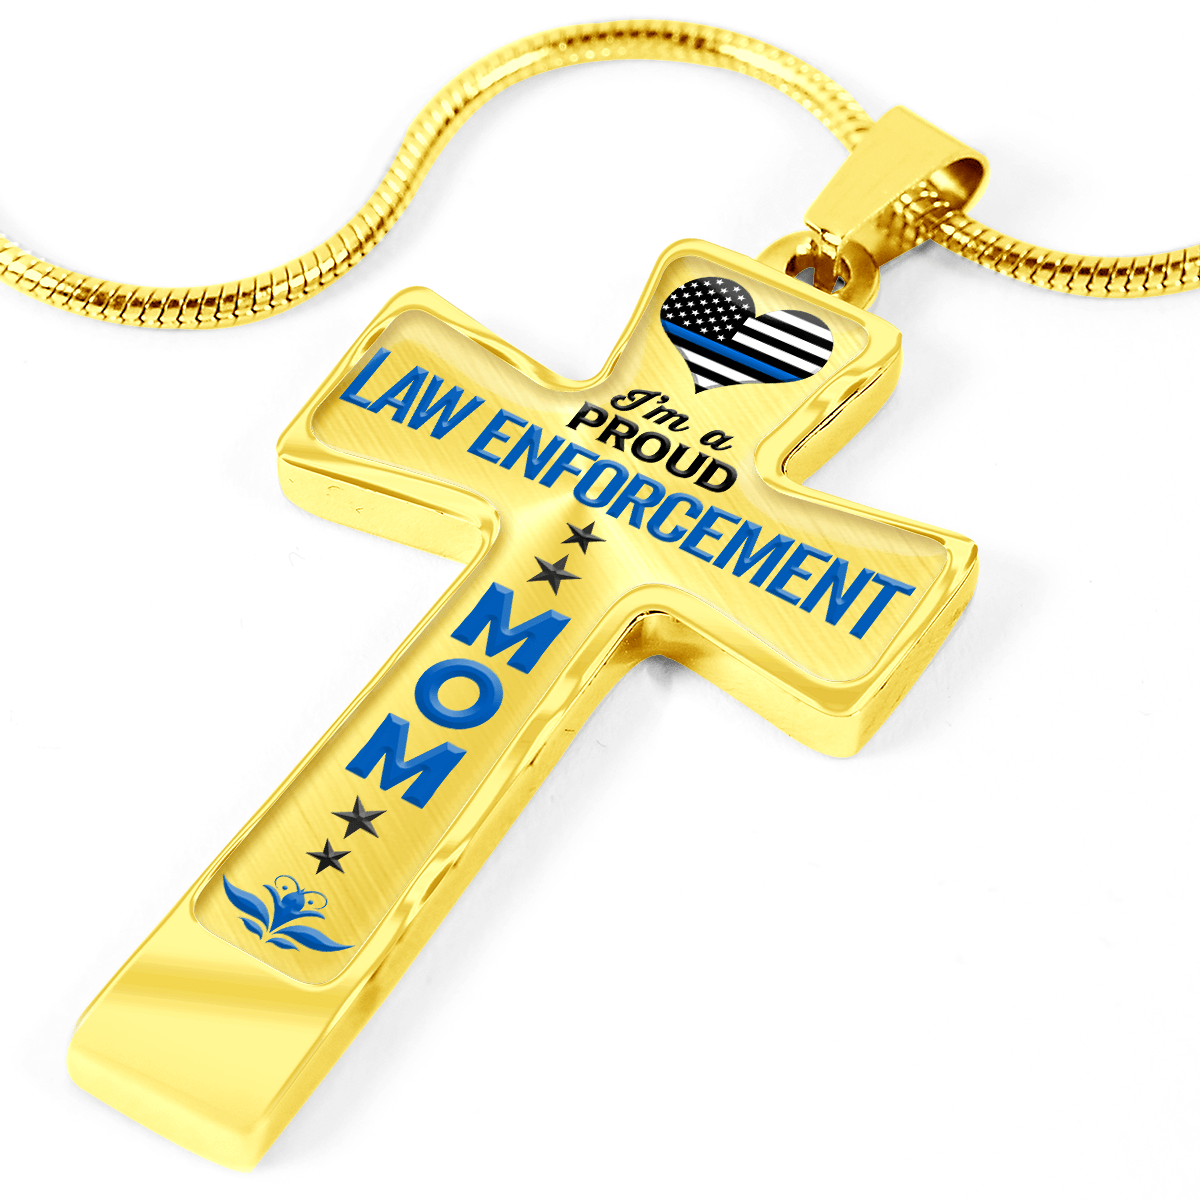 Proud Law Enforcement Mom Cross Necklace - Heroic Defender